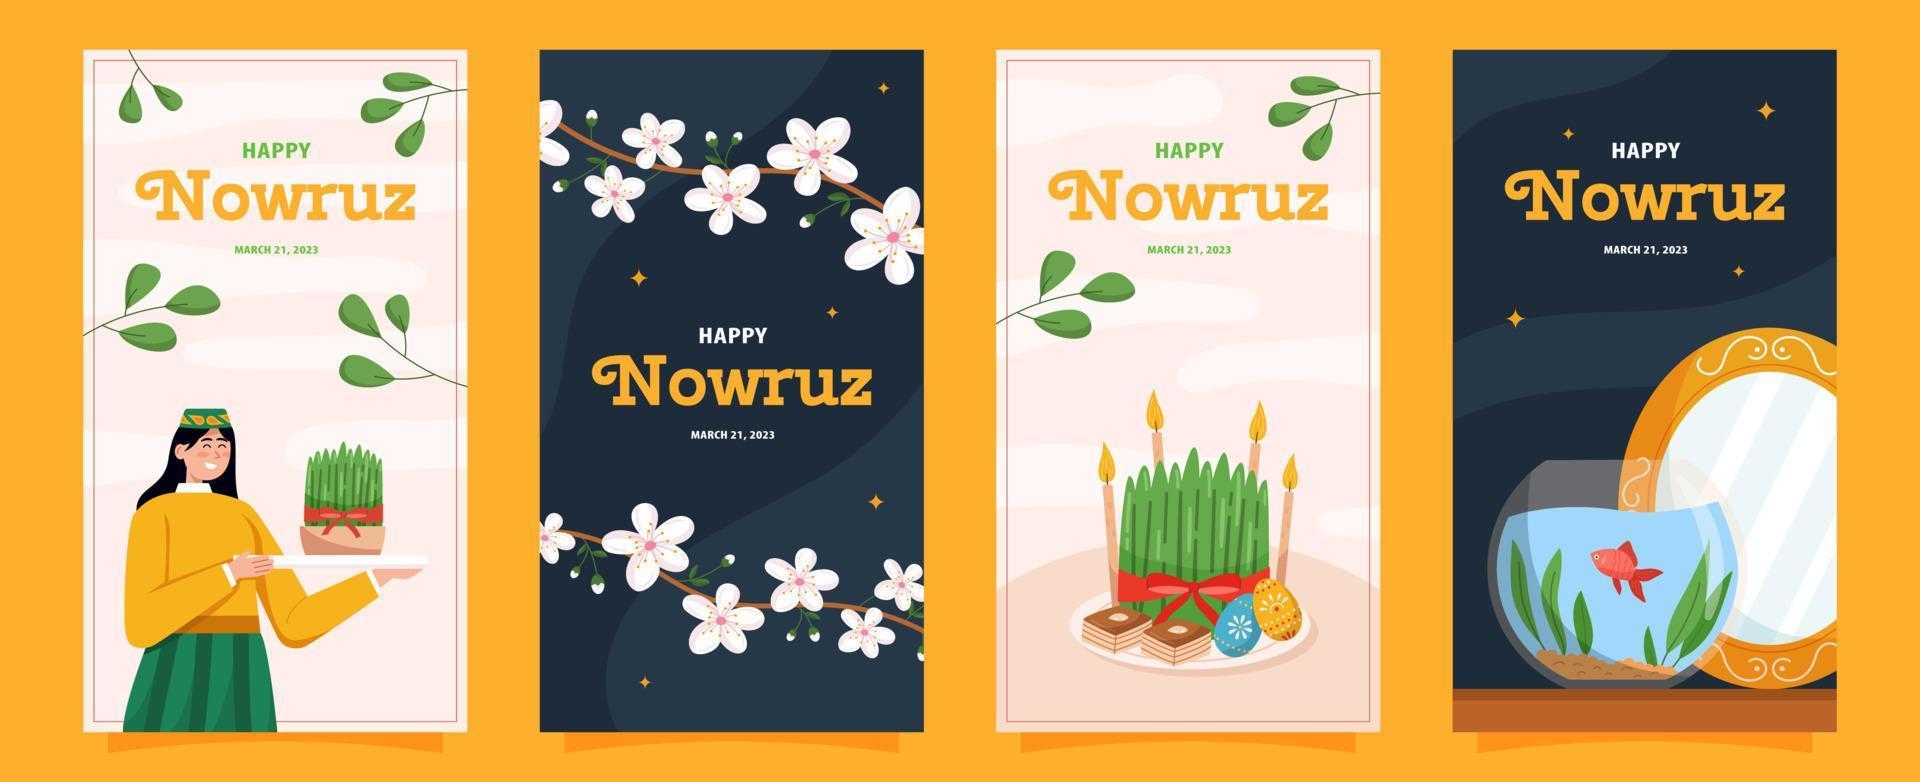 contento Nowruz storie impostato vettore